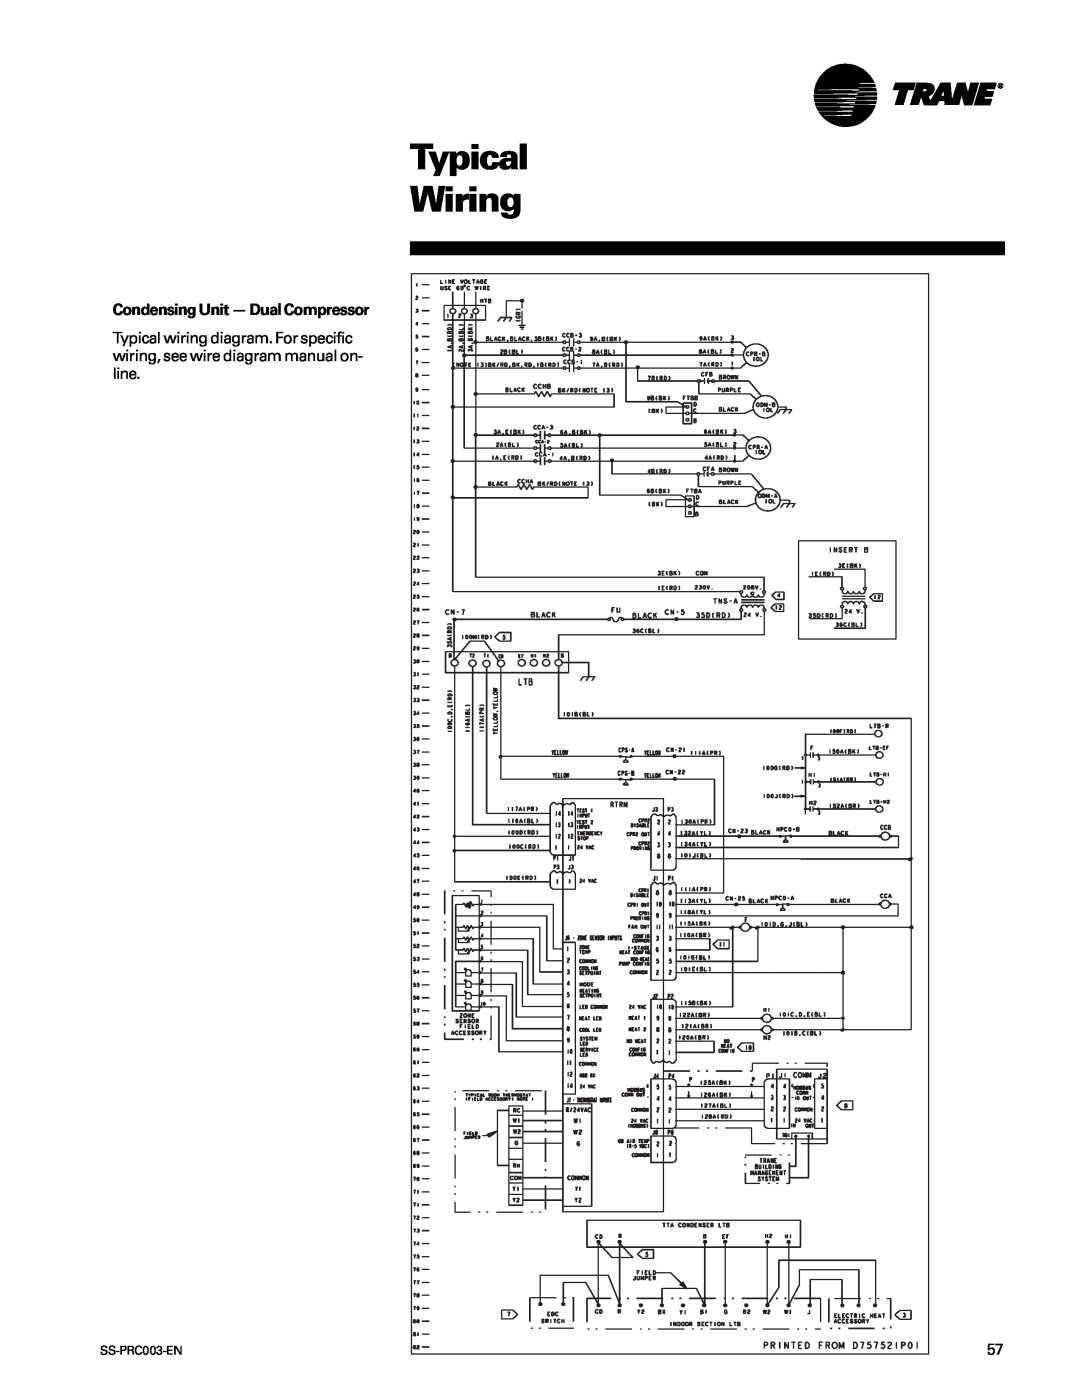 Trane SS-PRC003-EN manual Typical Wiring, Condensing Unit - Dual Compressor 